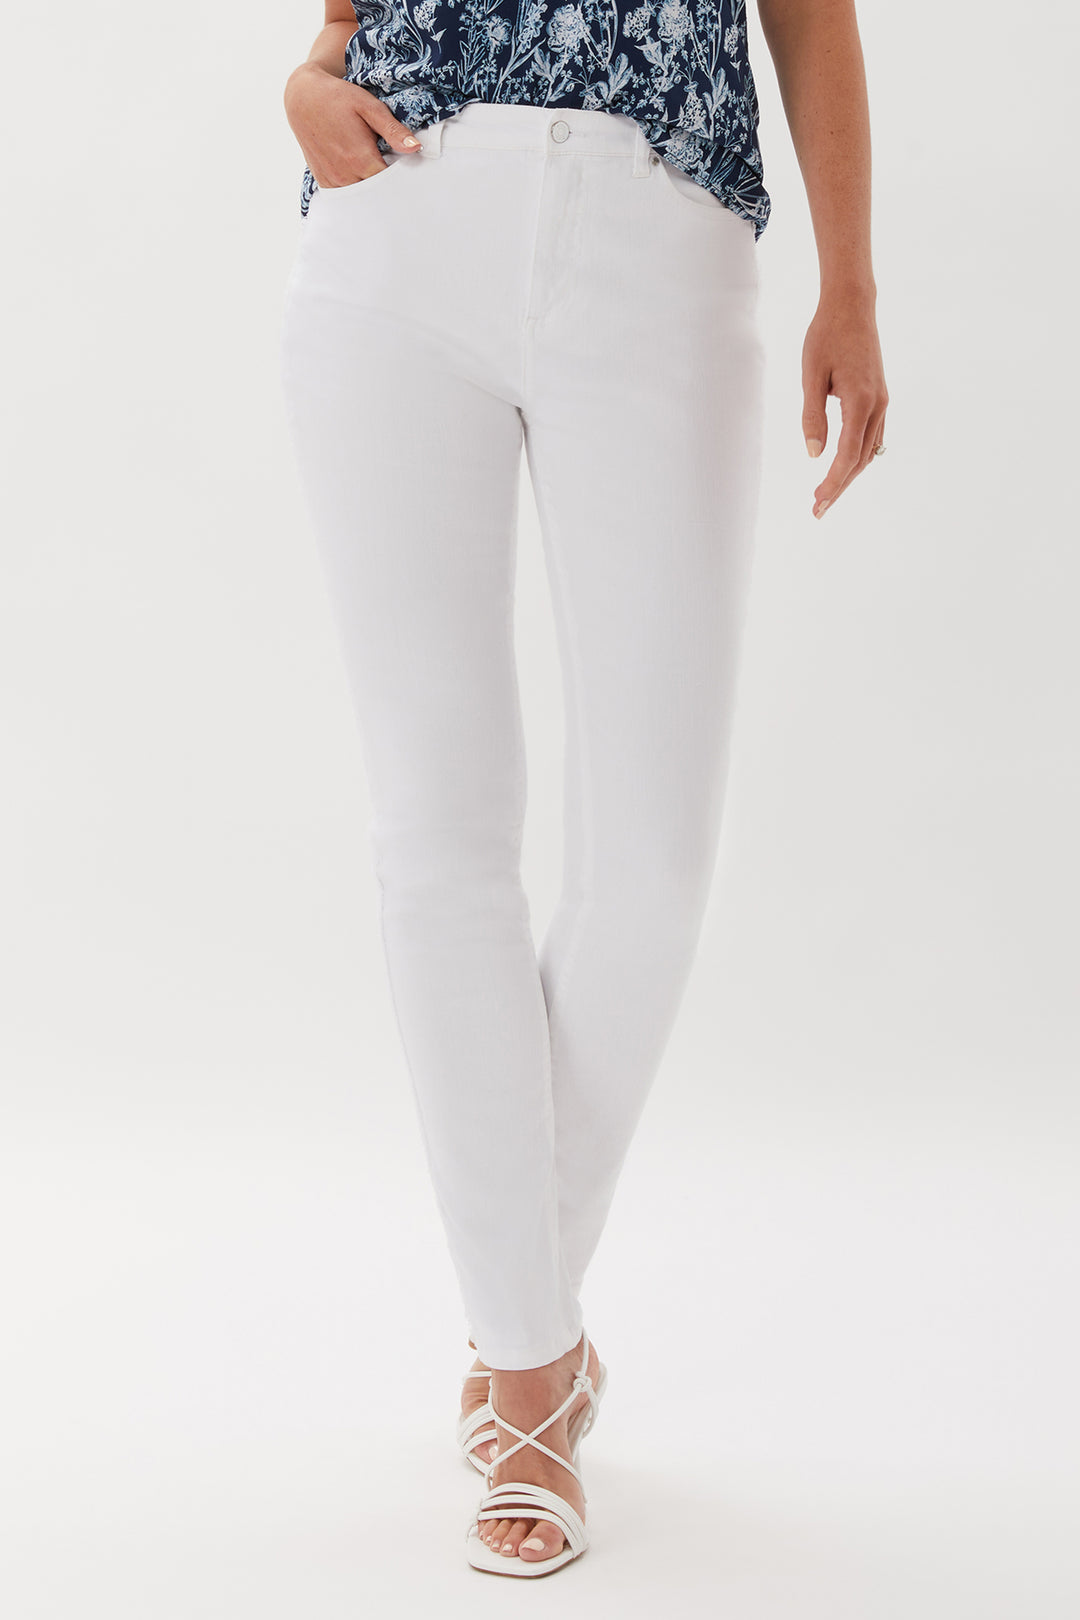 New Melrose Five Pocket Jean - White